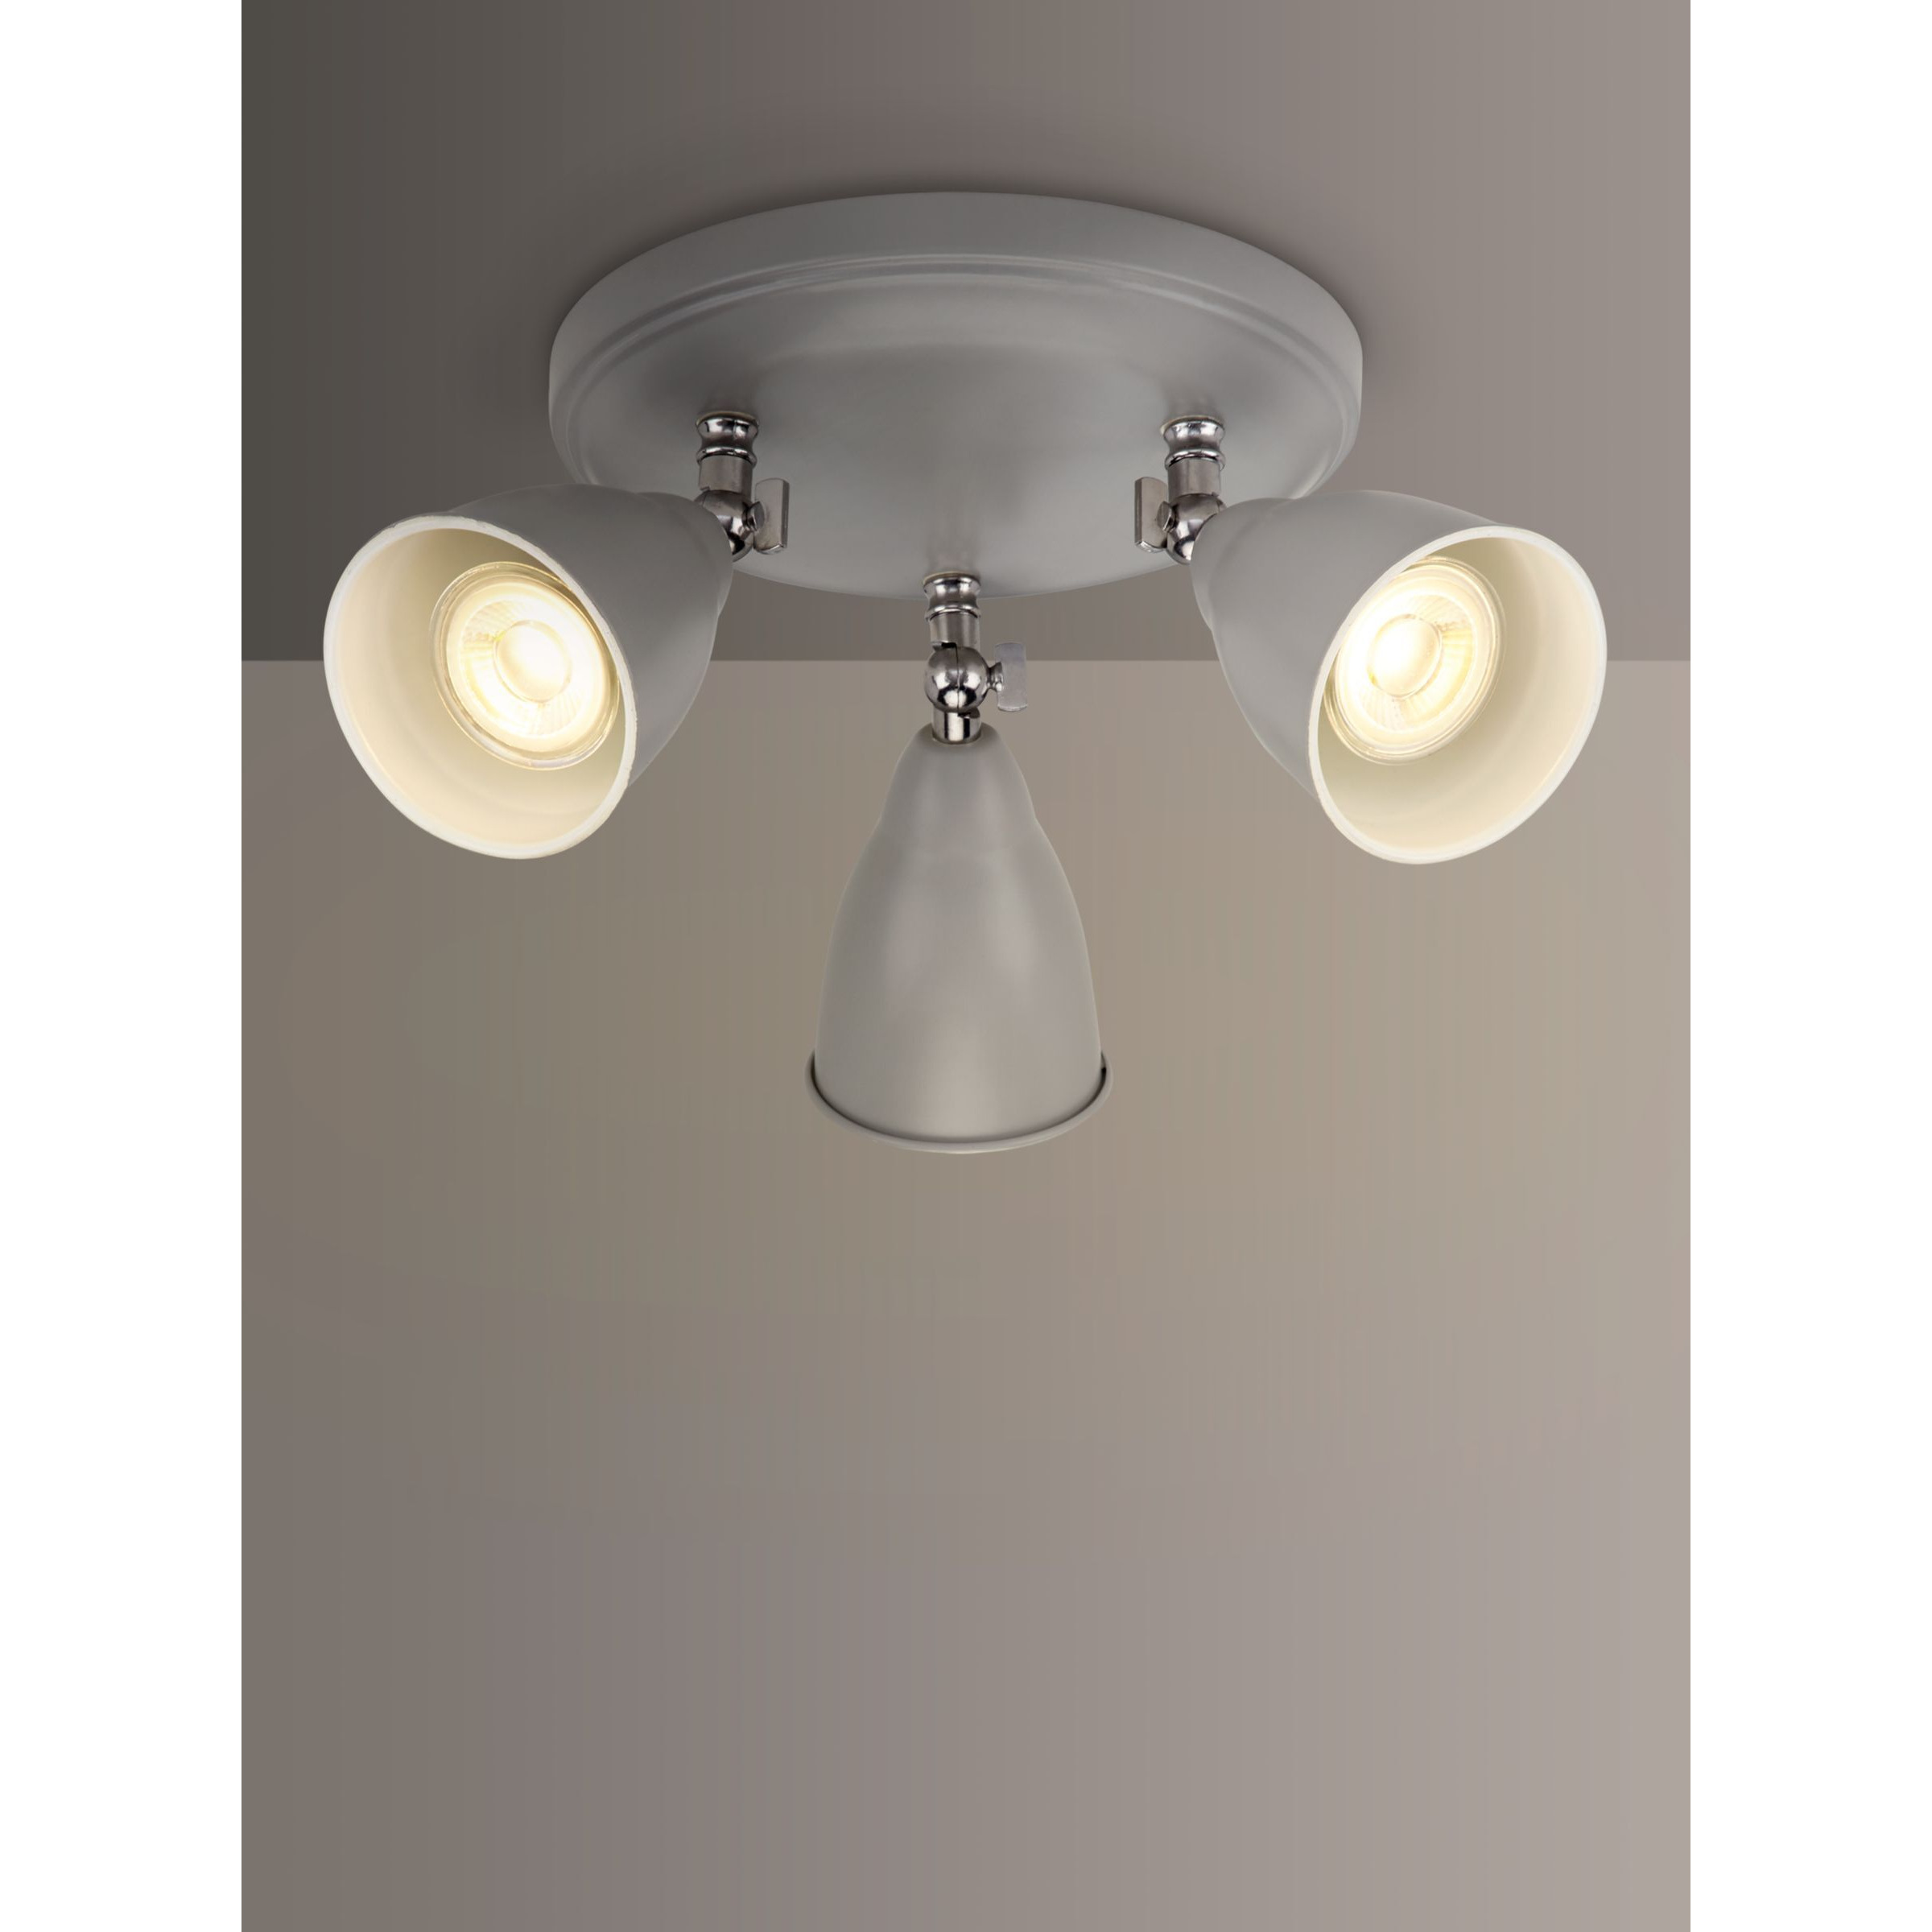 John Lewis Plymouth GU10 LED 3 Spotlight Ceiling Plate, Grey - image 1